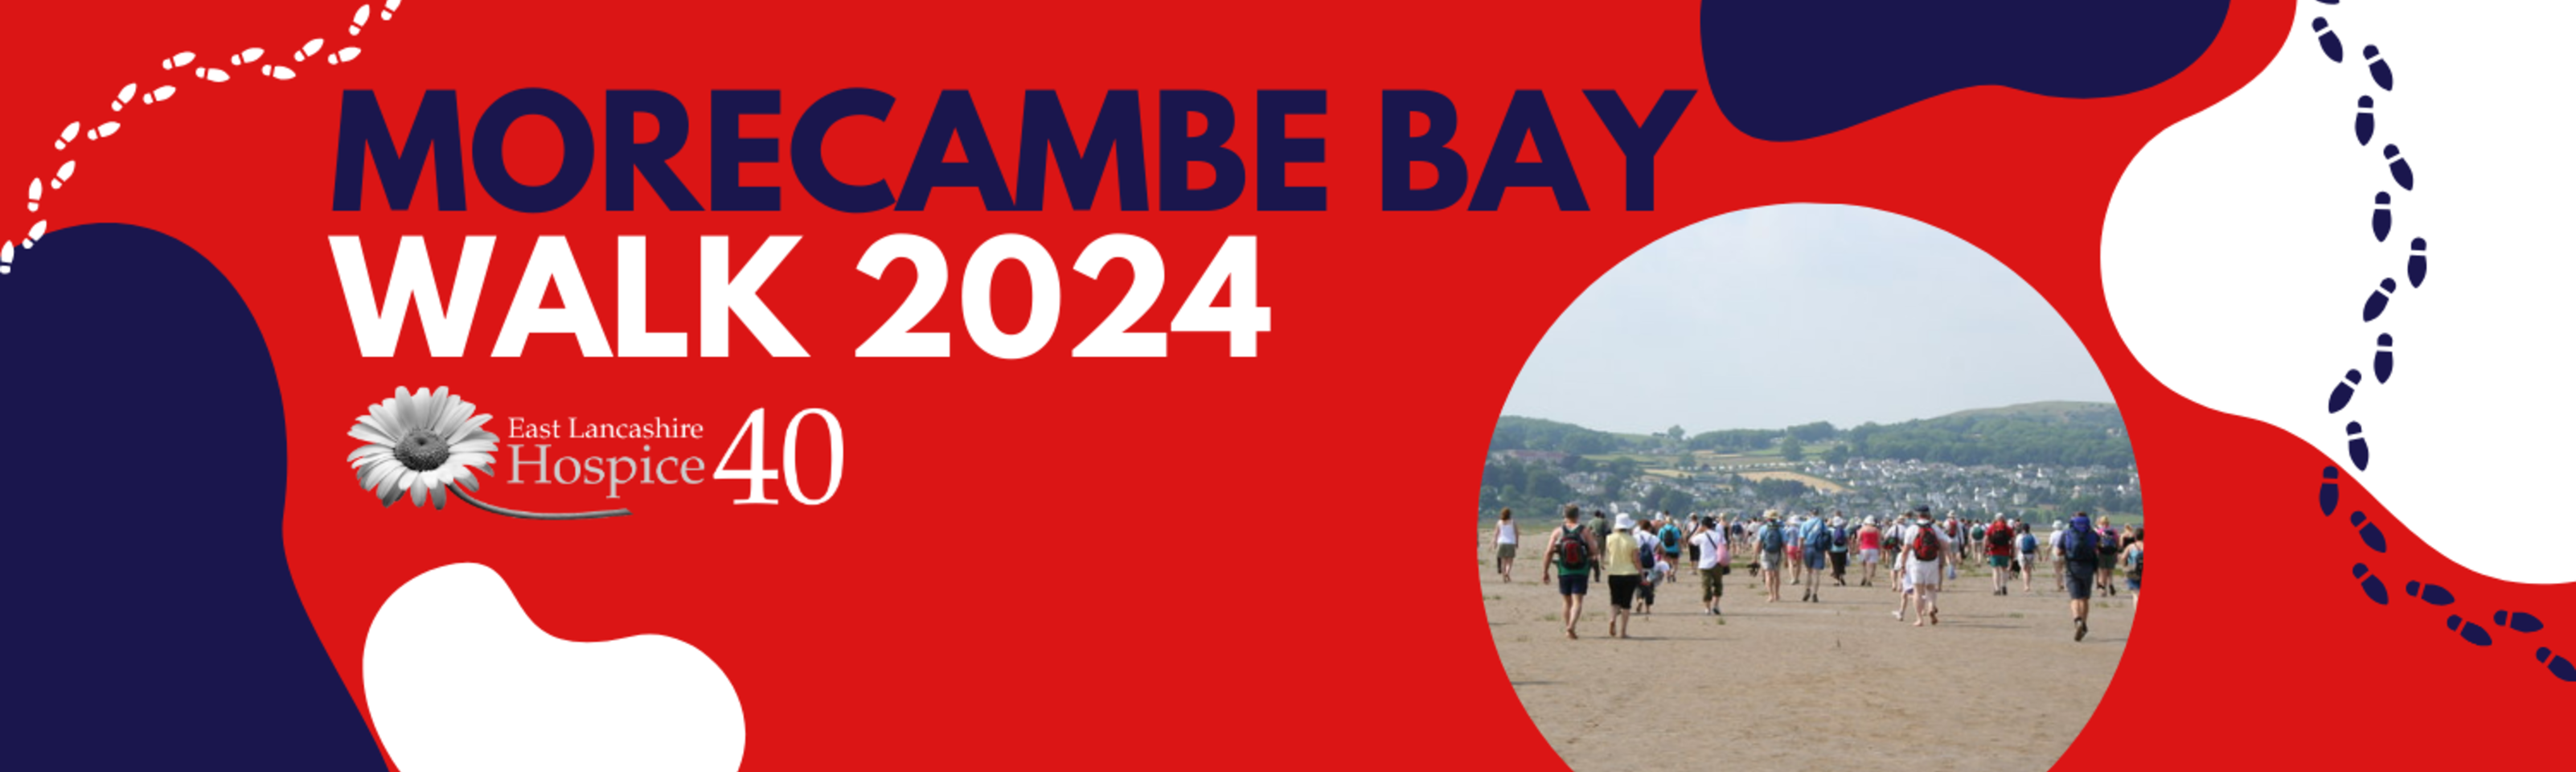 Morecambe Bay Walk 2024